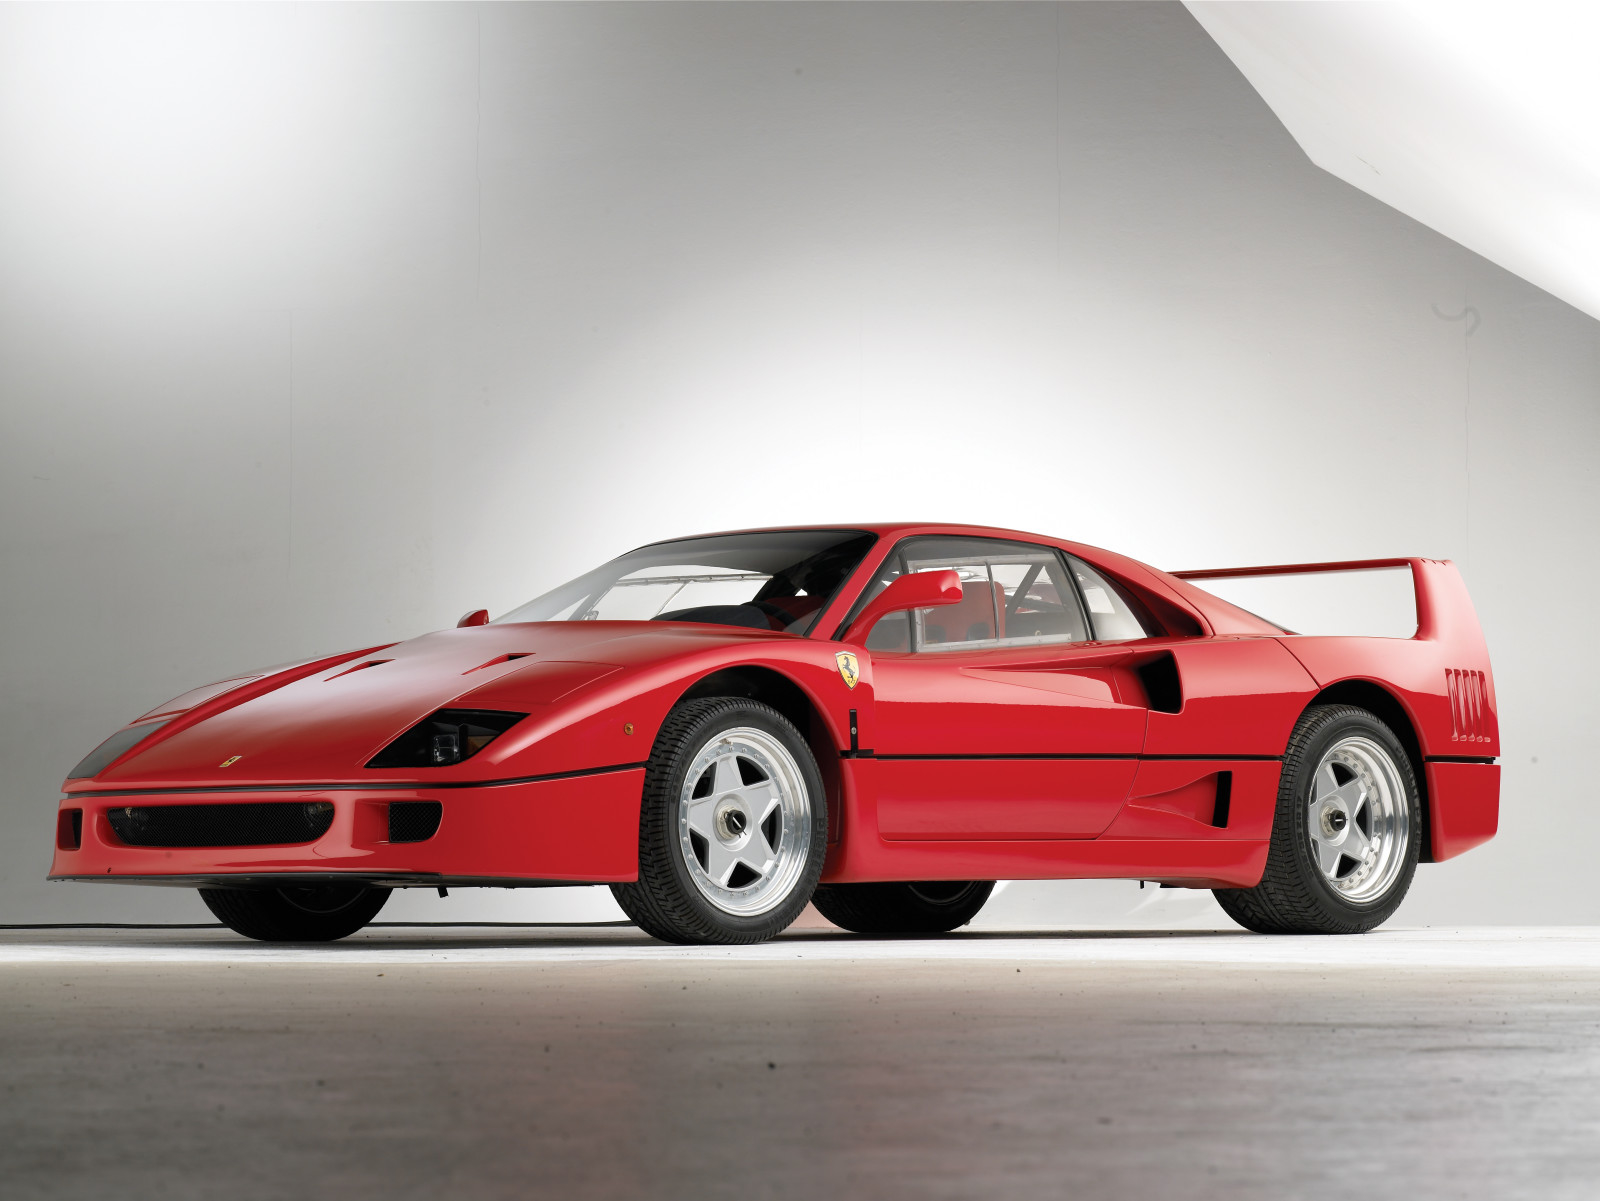 F40 - precursorul supercarurilor Ferrari